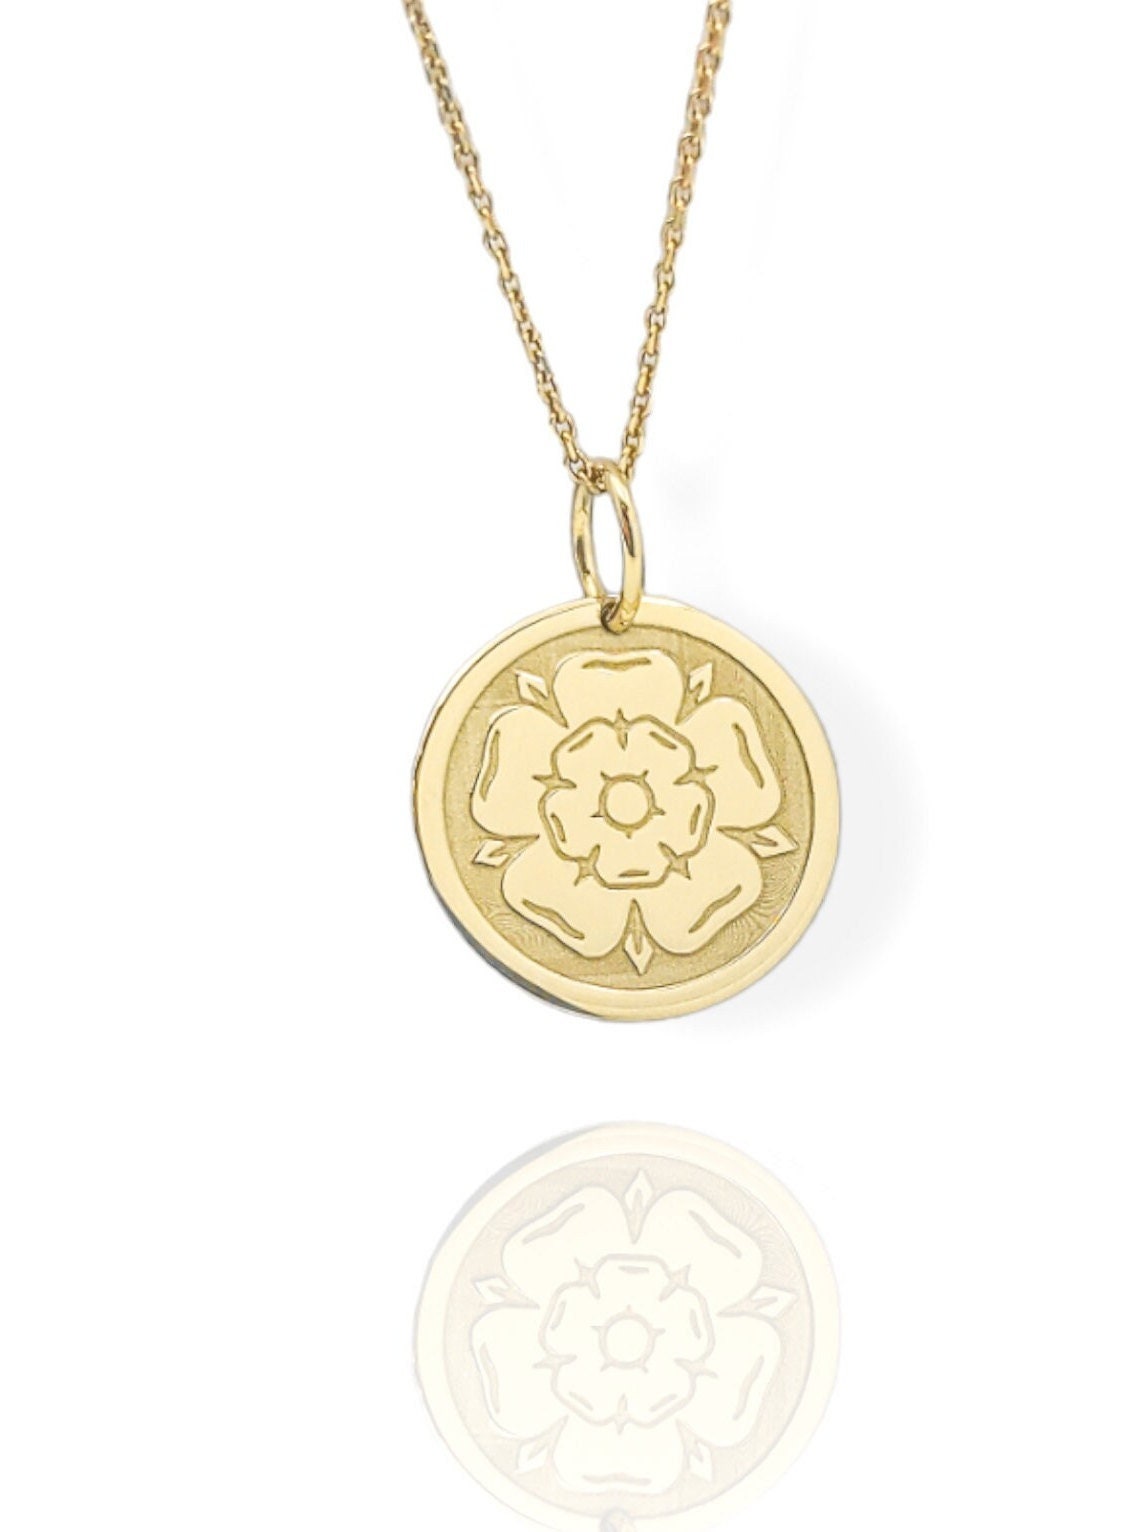 9ct White Gold Yorkshire Rose Charm Pendant